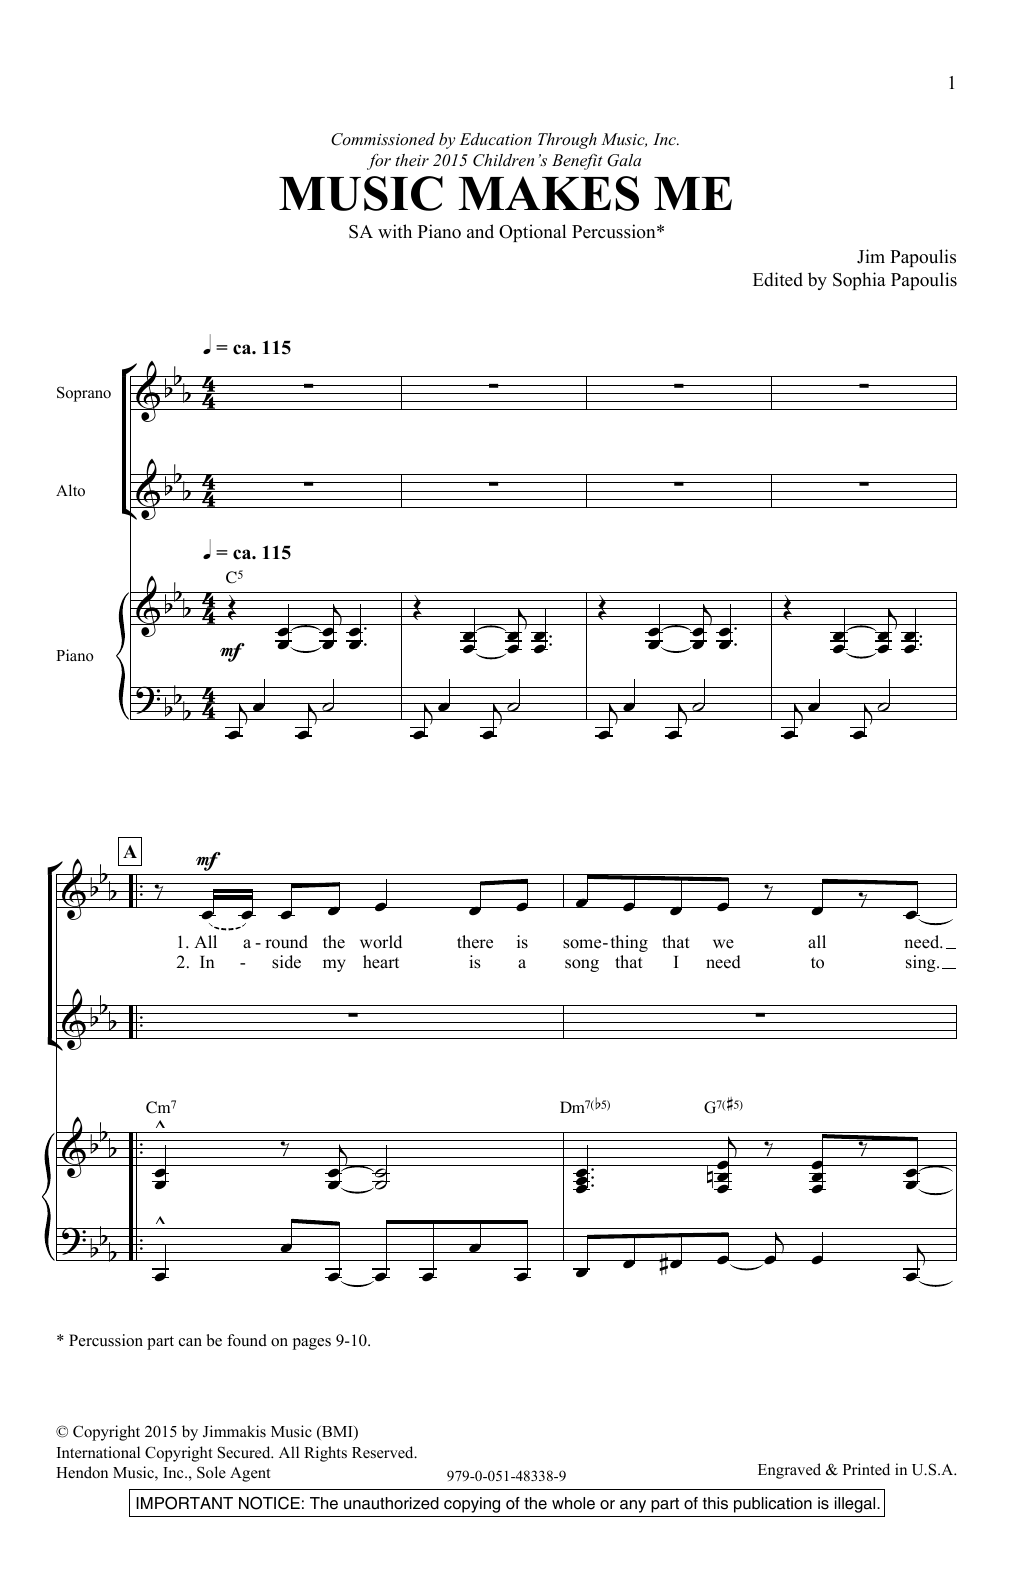 Jim Papoulis Music Makes Me Sheet Music Notes & Chords for 2-Part Choir - Download or Print PDF